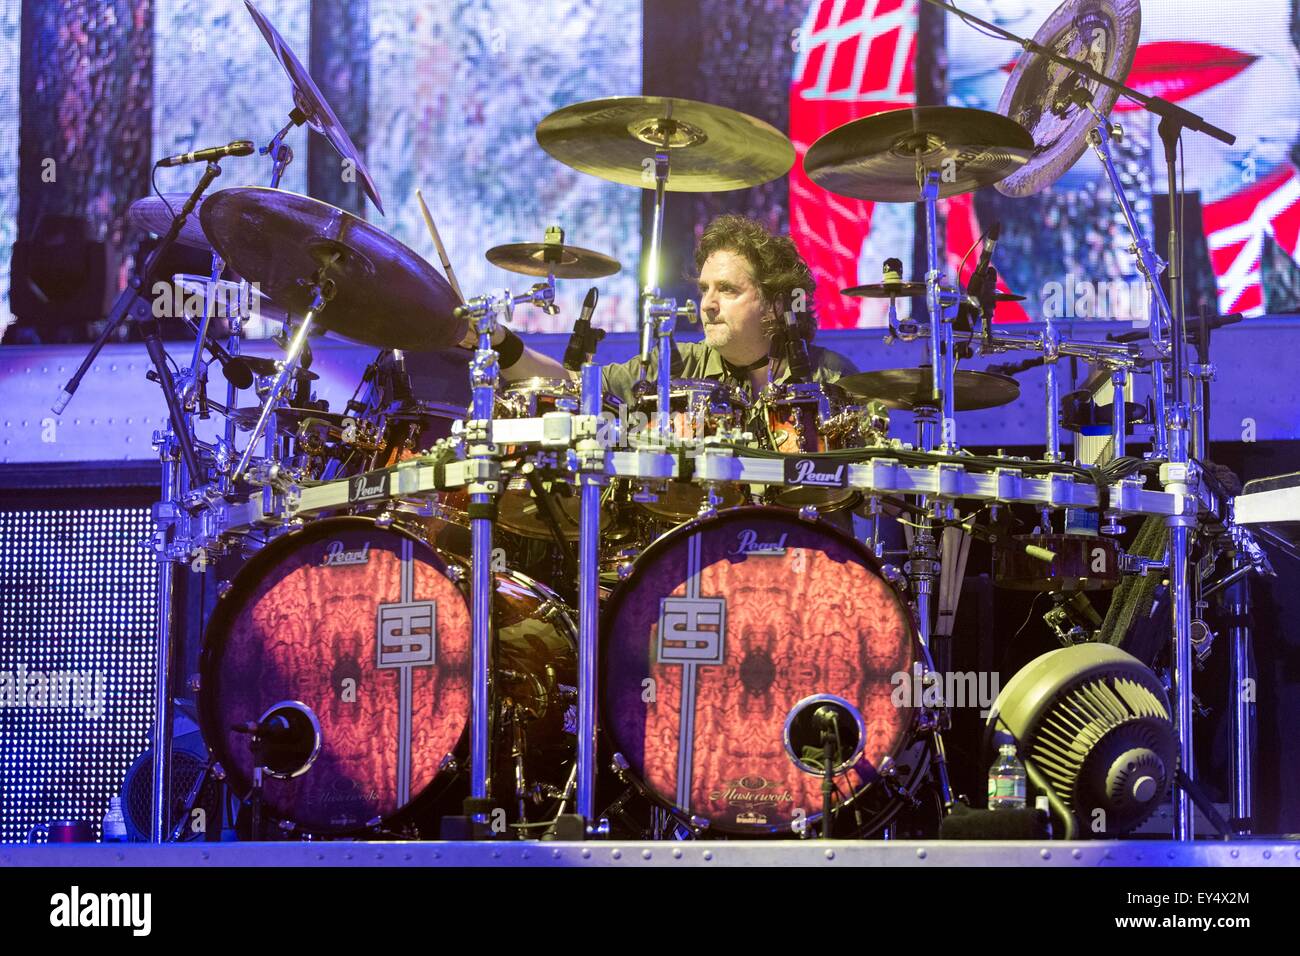 Oshkosh, Wisconsin, USA. 18th July, 2015. Drummer TODD SUCHERMAN of Styx performs live at the Rock USA music festival in Oshkosh, Wisconsin © Daniel DeSlover/ZUMA Wire/Alamy Live News Stock Photo